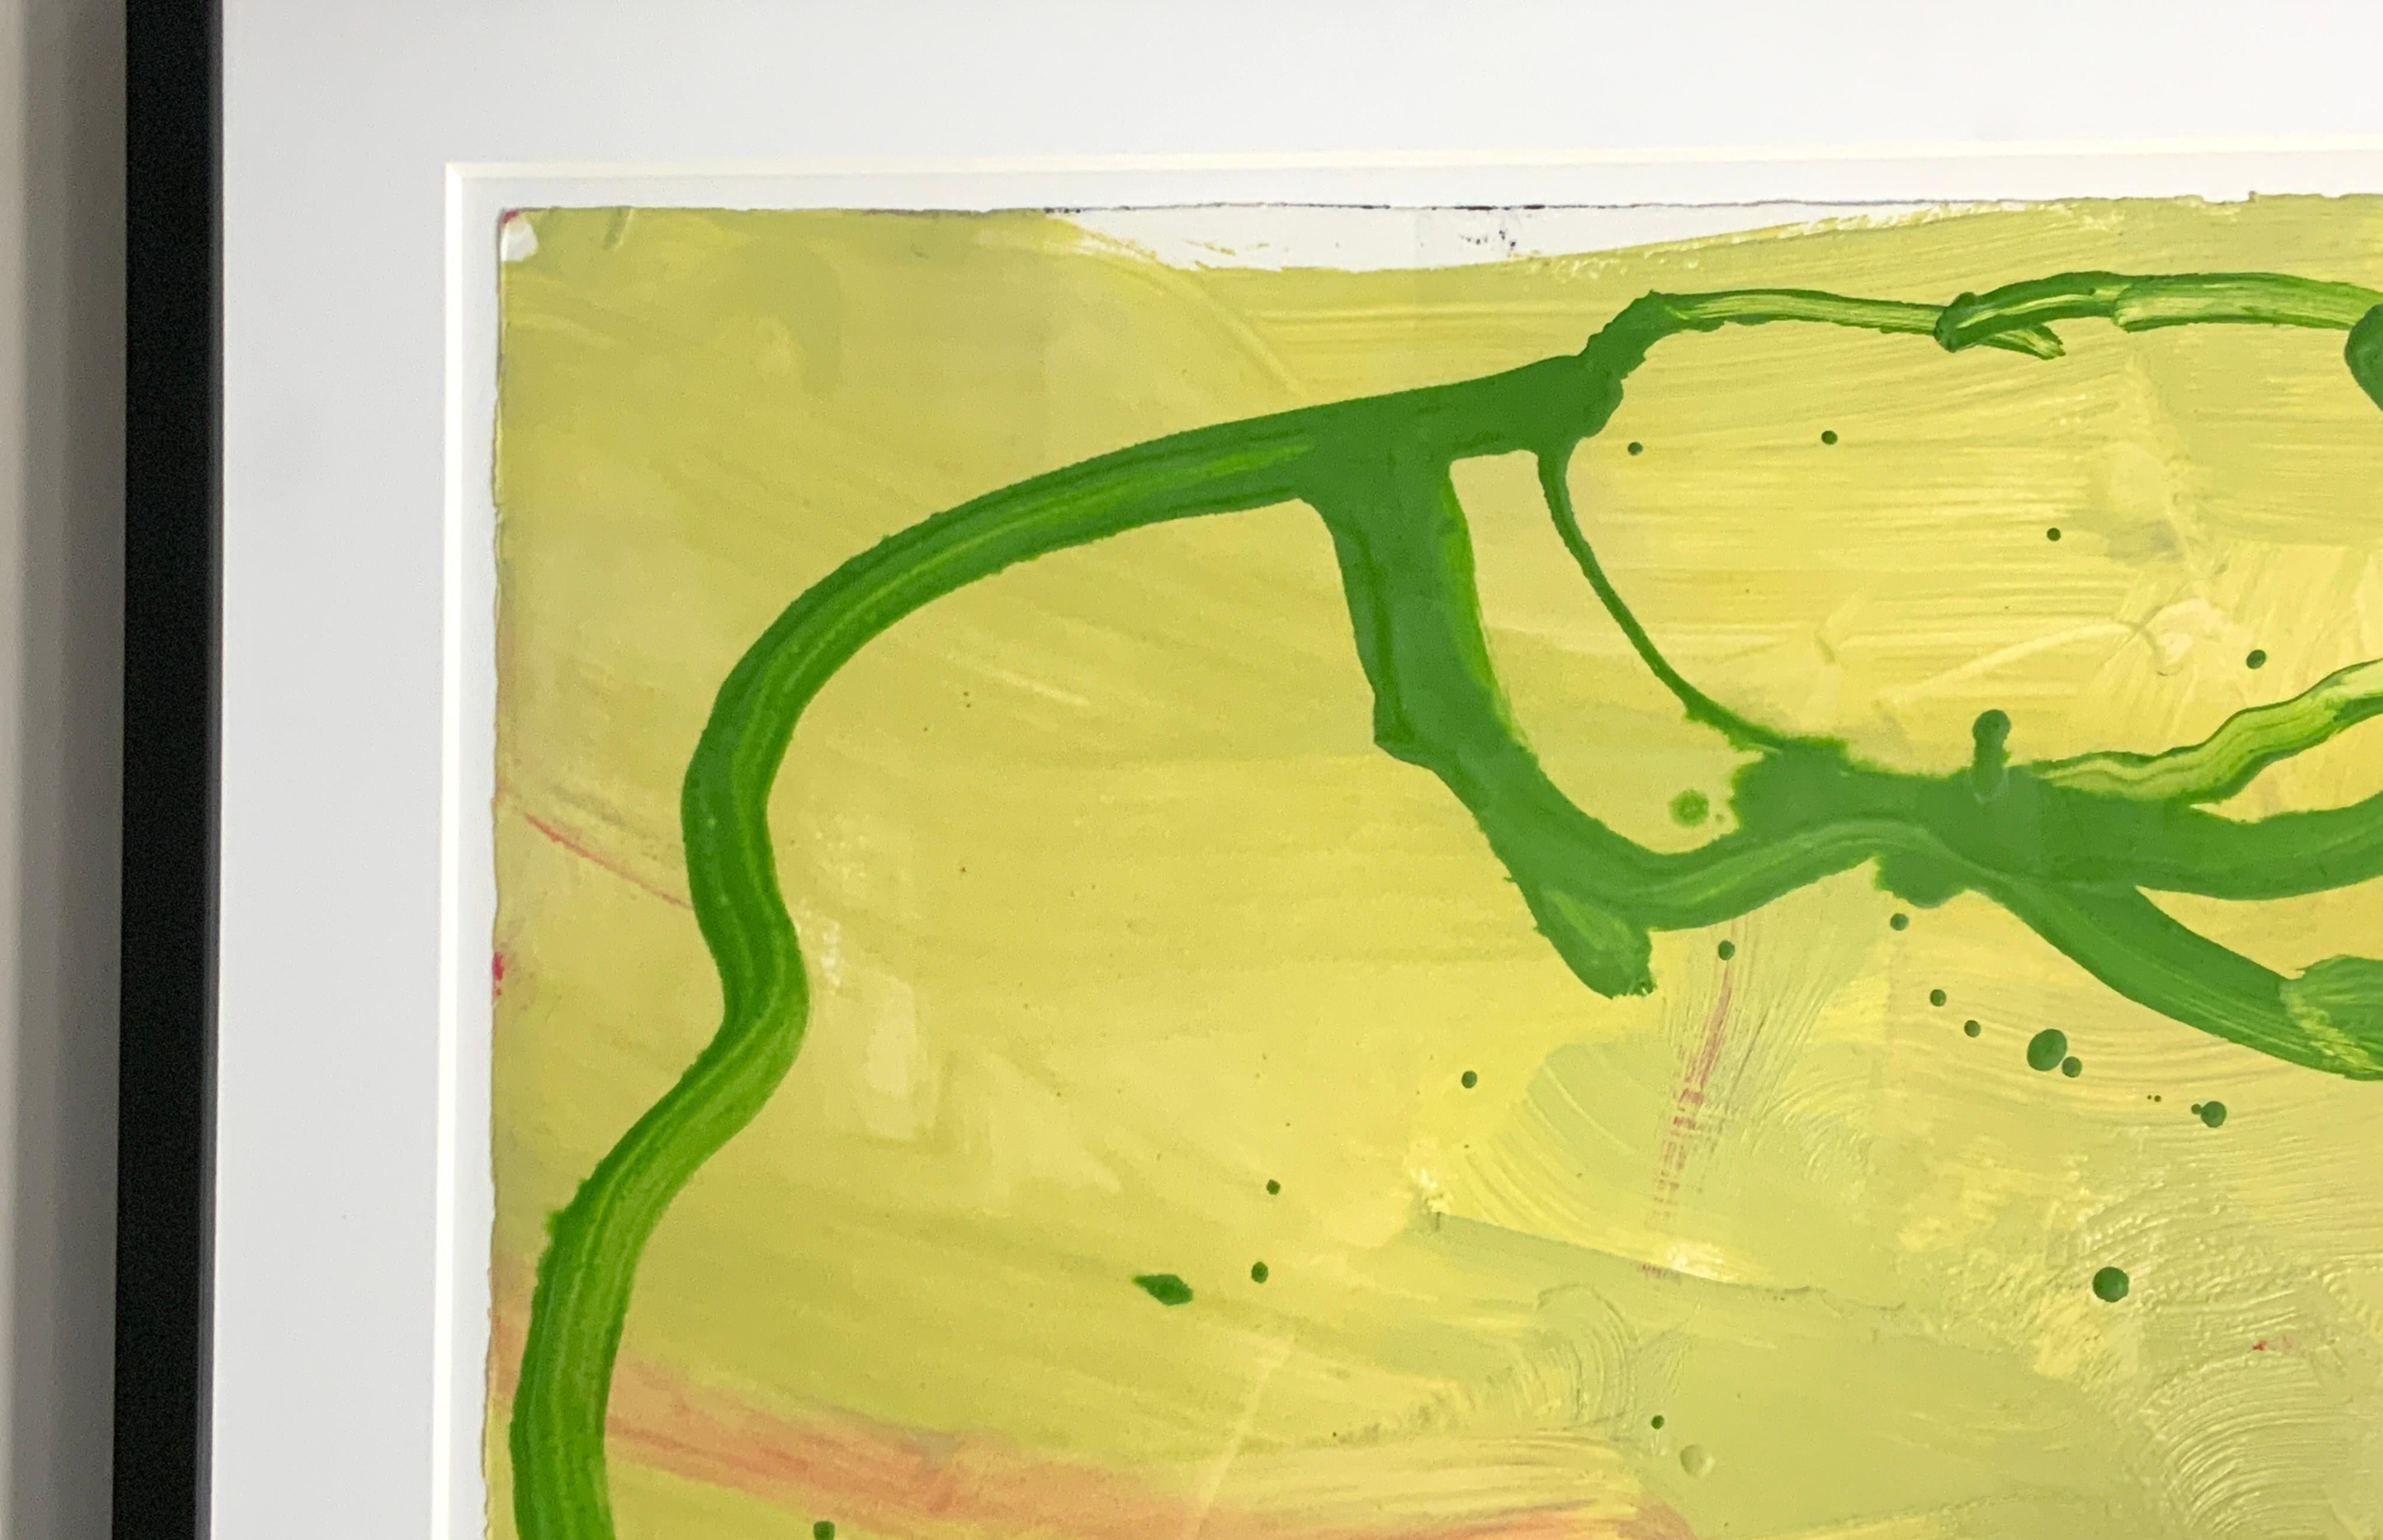 Postmoderne Gary Komarin Untitled Green Vessel on Yellow Green, acrylique sur papier, 2000 en vente